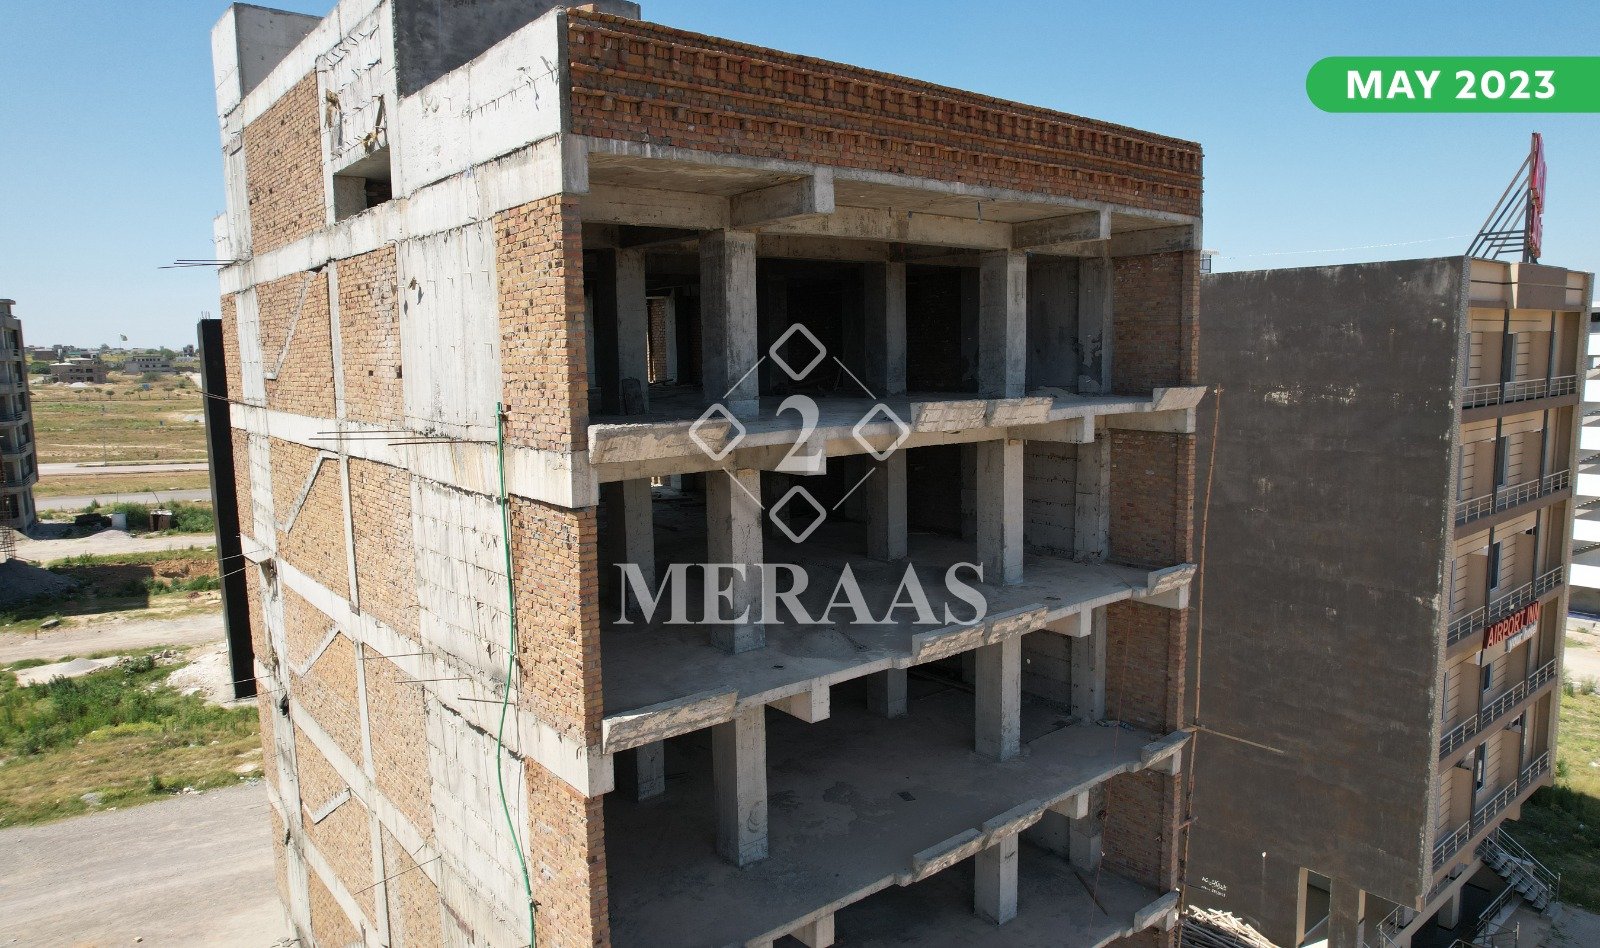 MERAAS ARCADE MAY CONSTRUCTION UPDATE